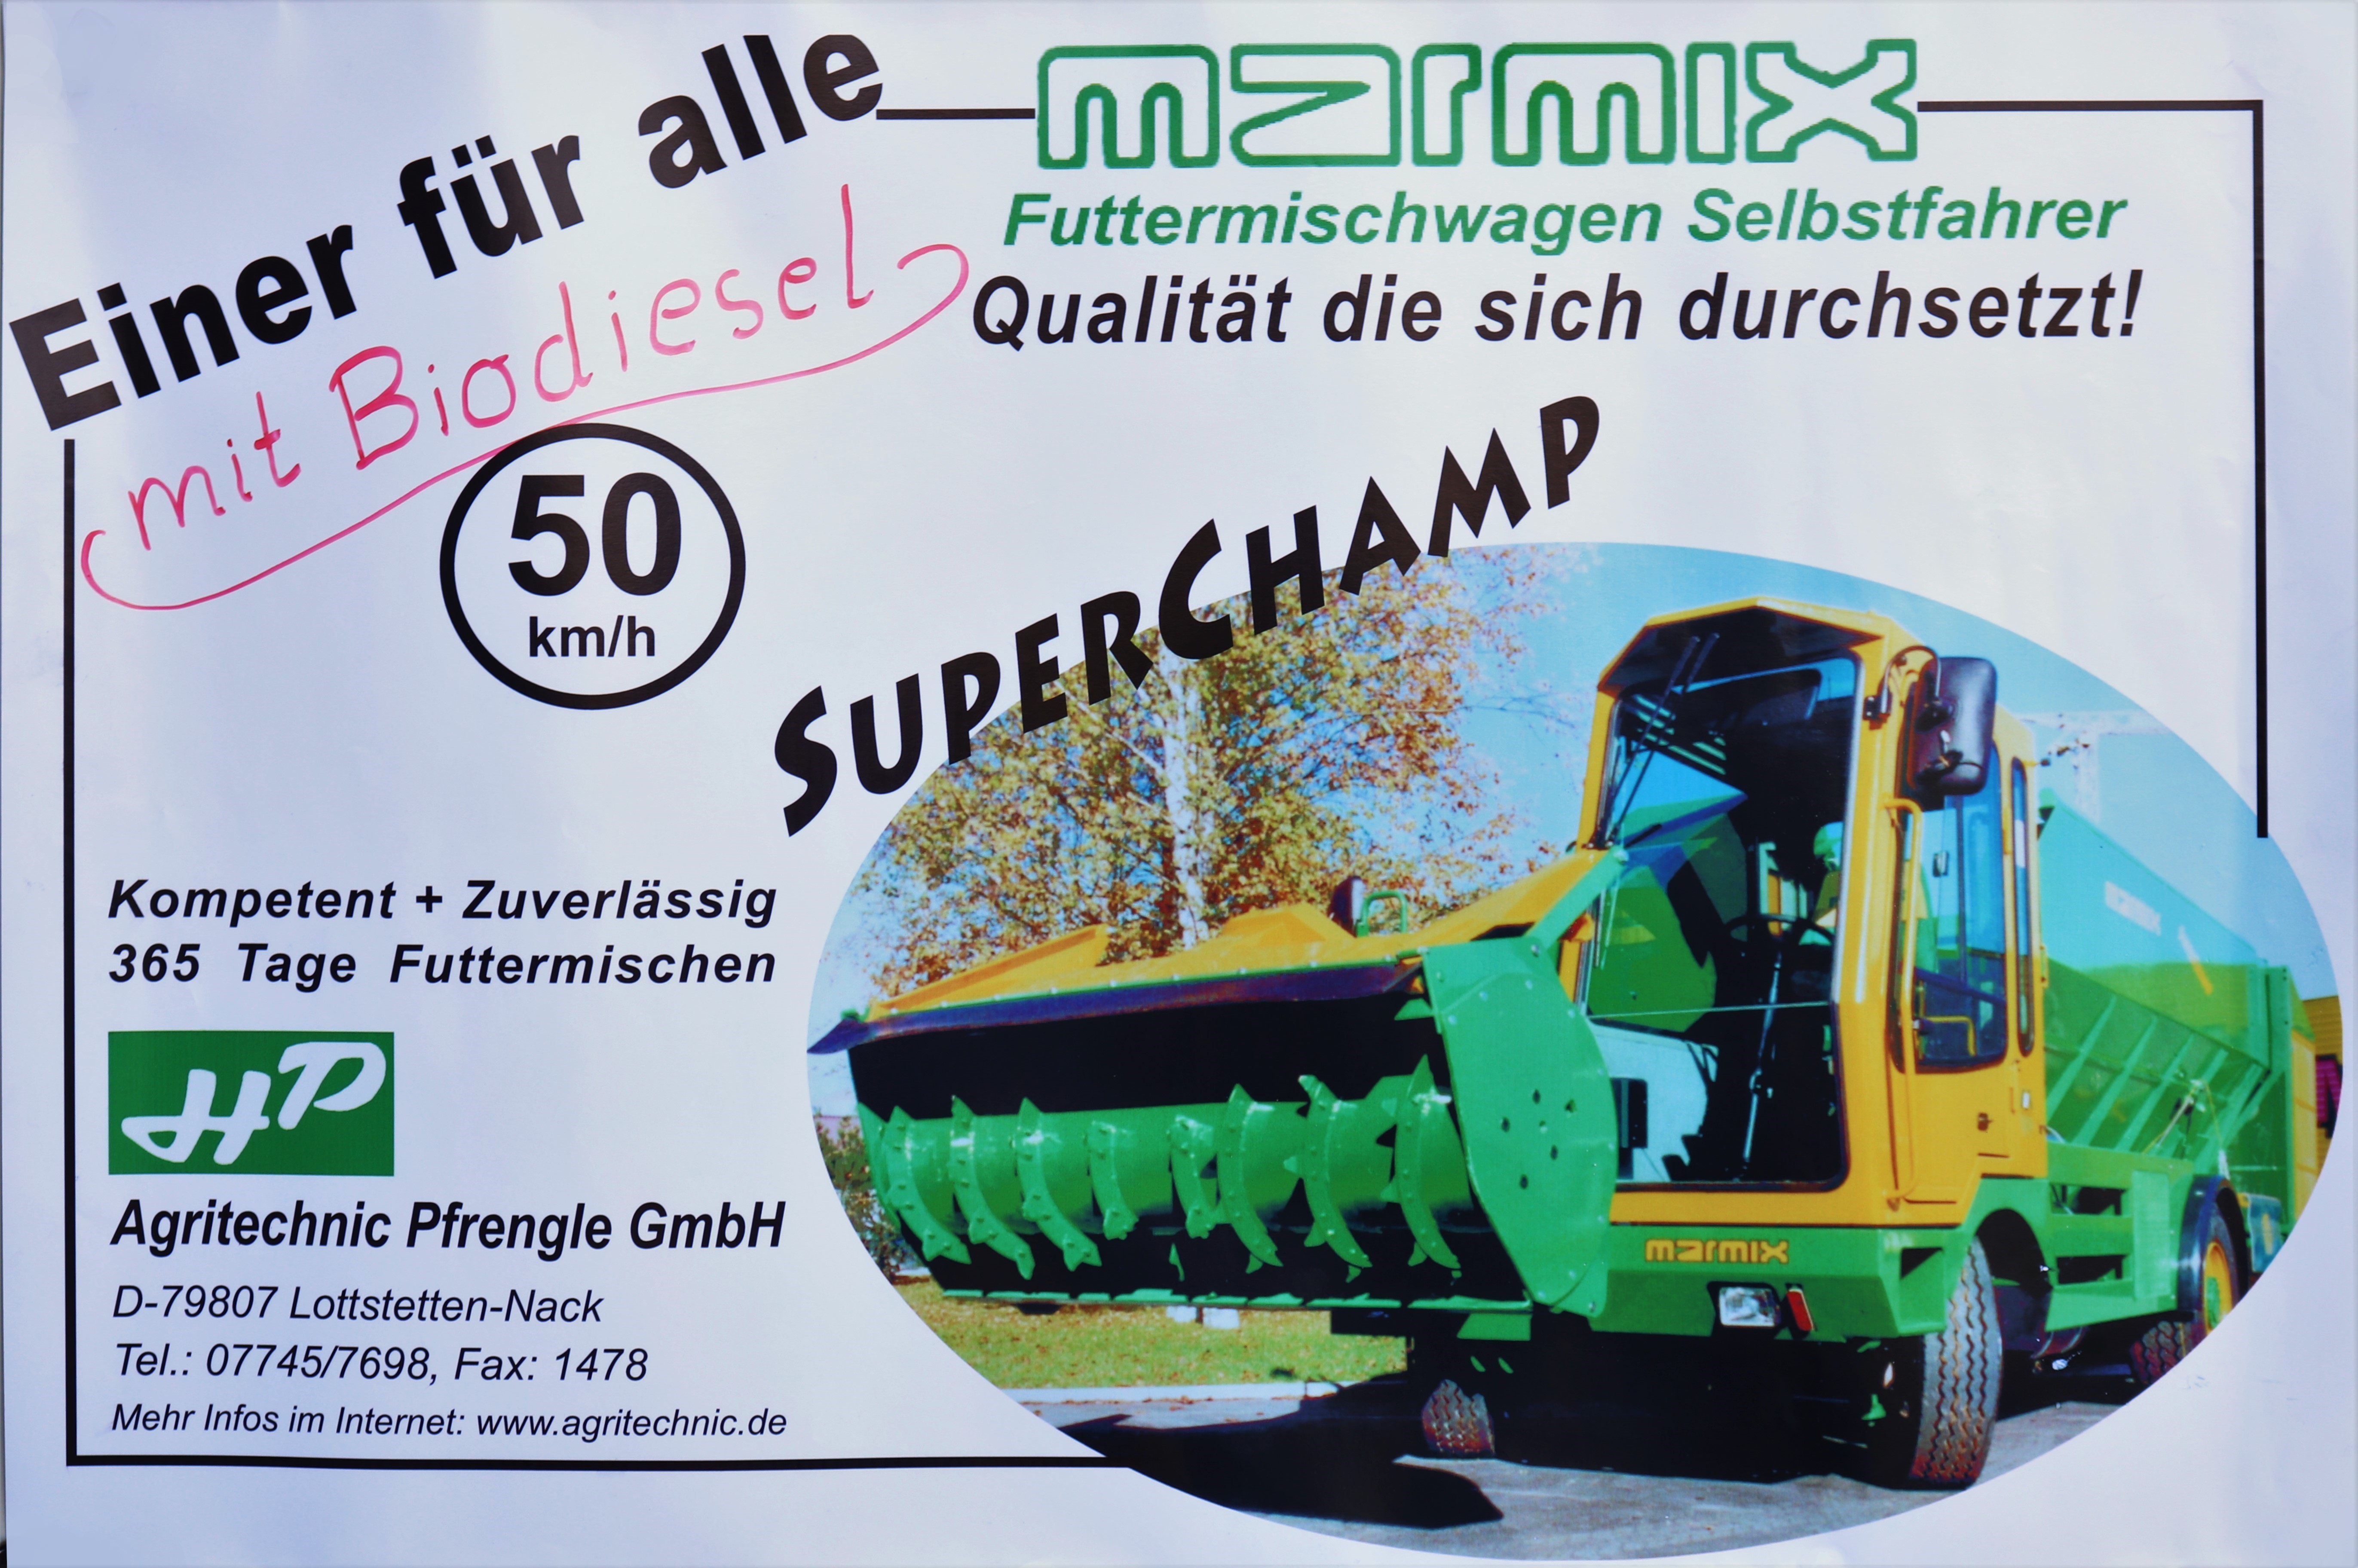 MARMIX Futtermischwagen Selbstfahrer Super Champ SL